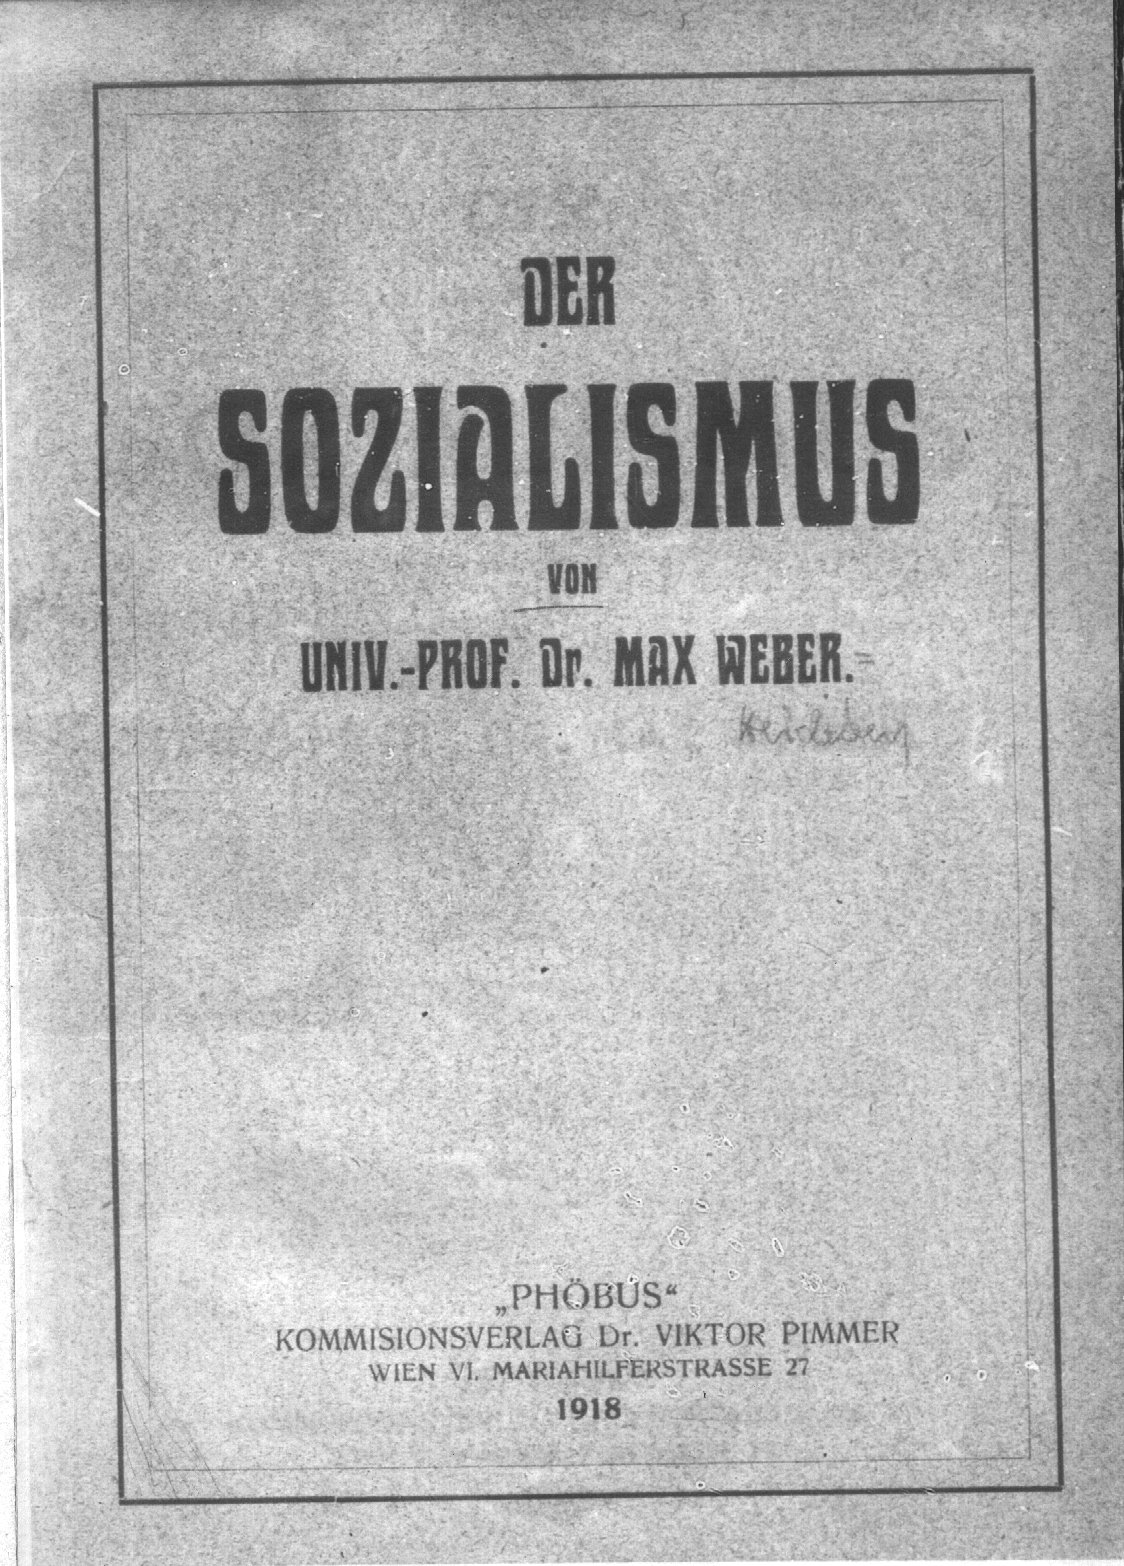 Max Weber Books